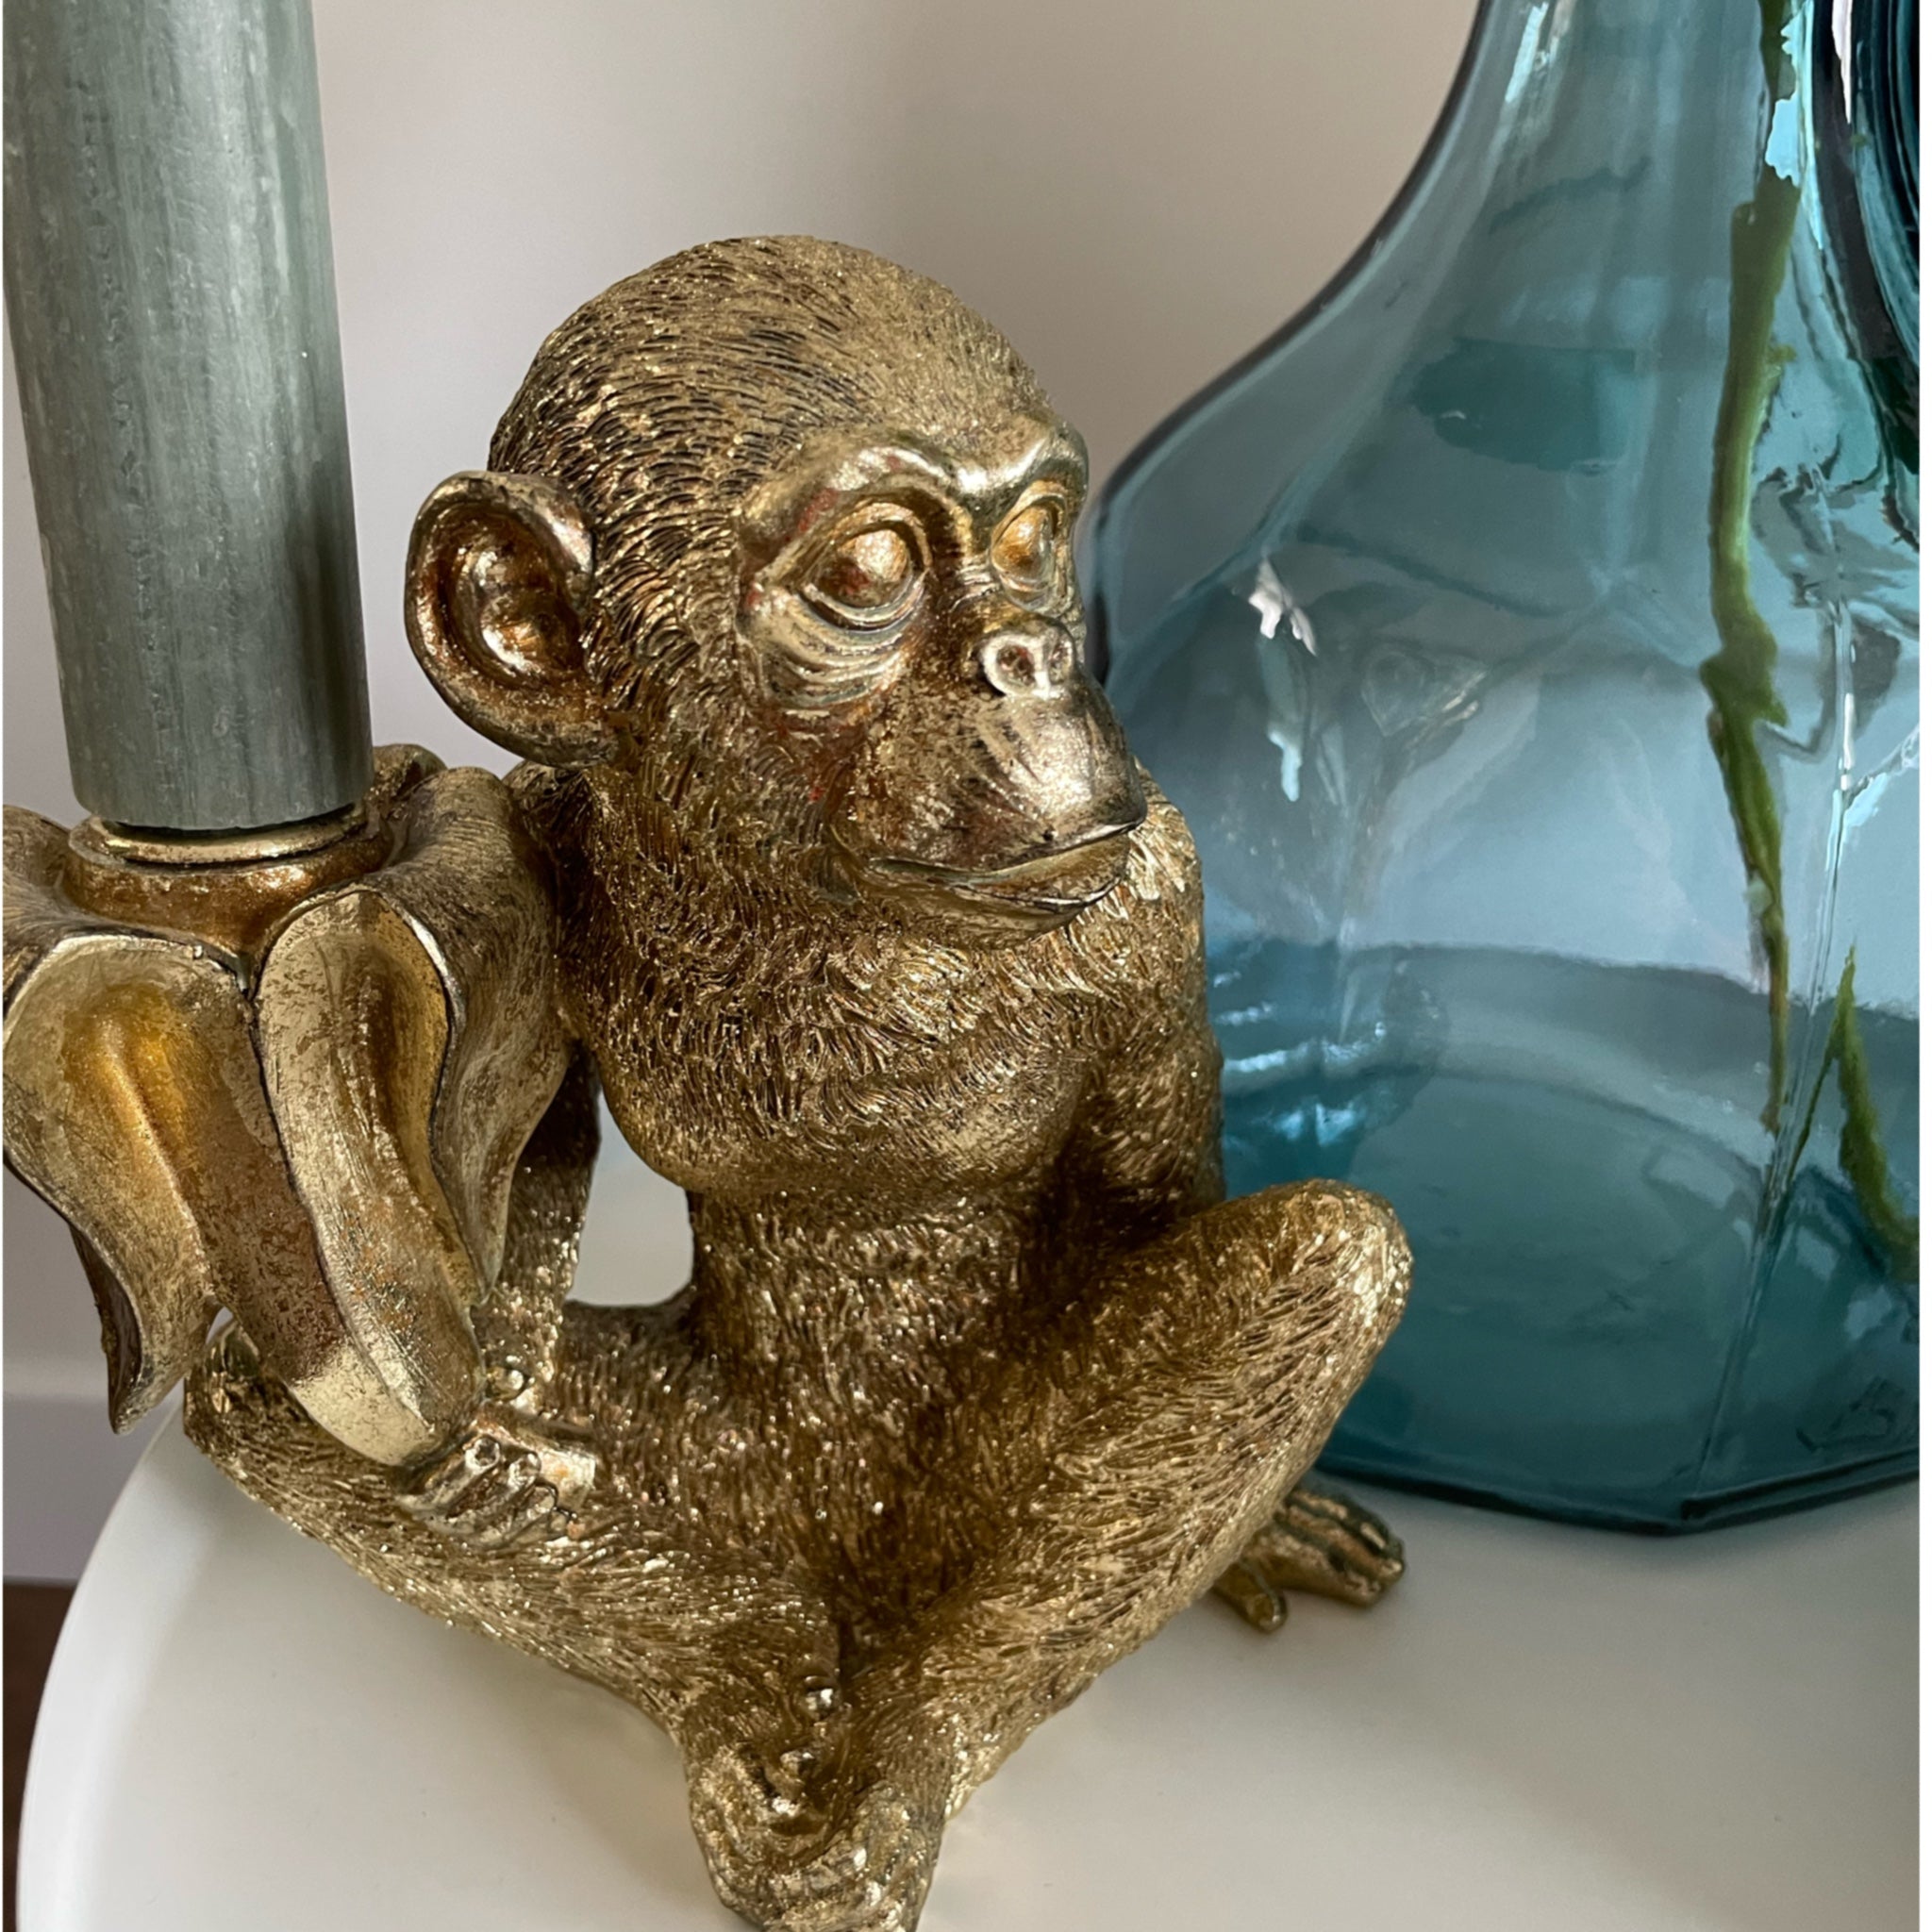 stil zebra ornament Gouden apen kandelaar l de finishing touch voor in je huis l Quyn.nl